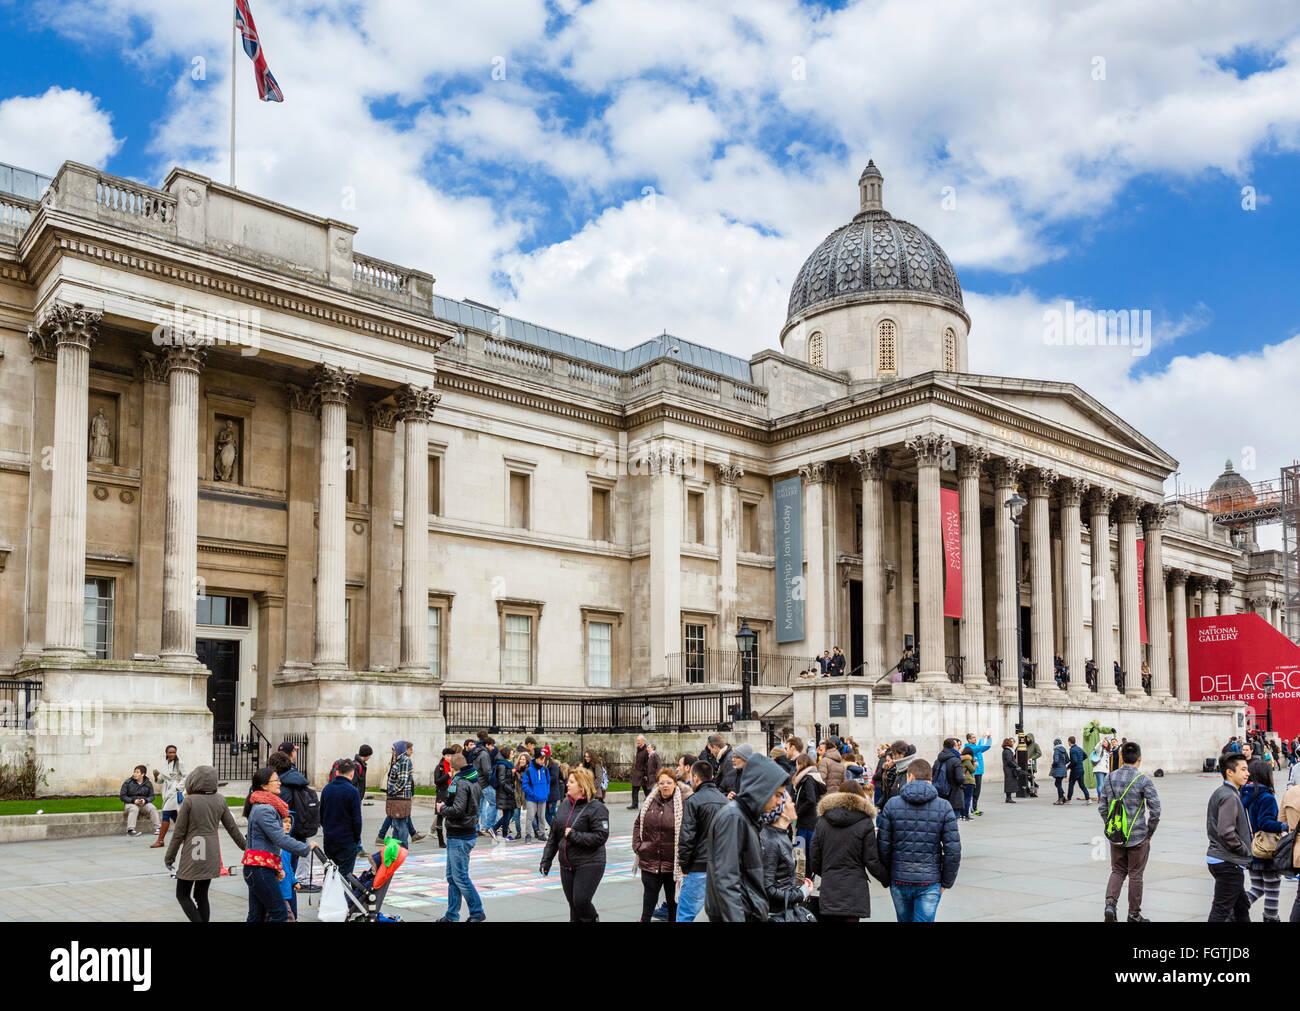 The National Gallery, Trafalgar Square, London, England, UK Stock Photo